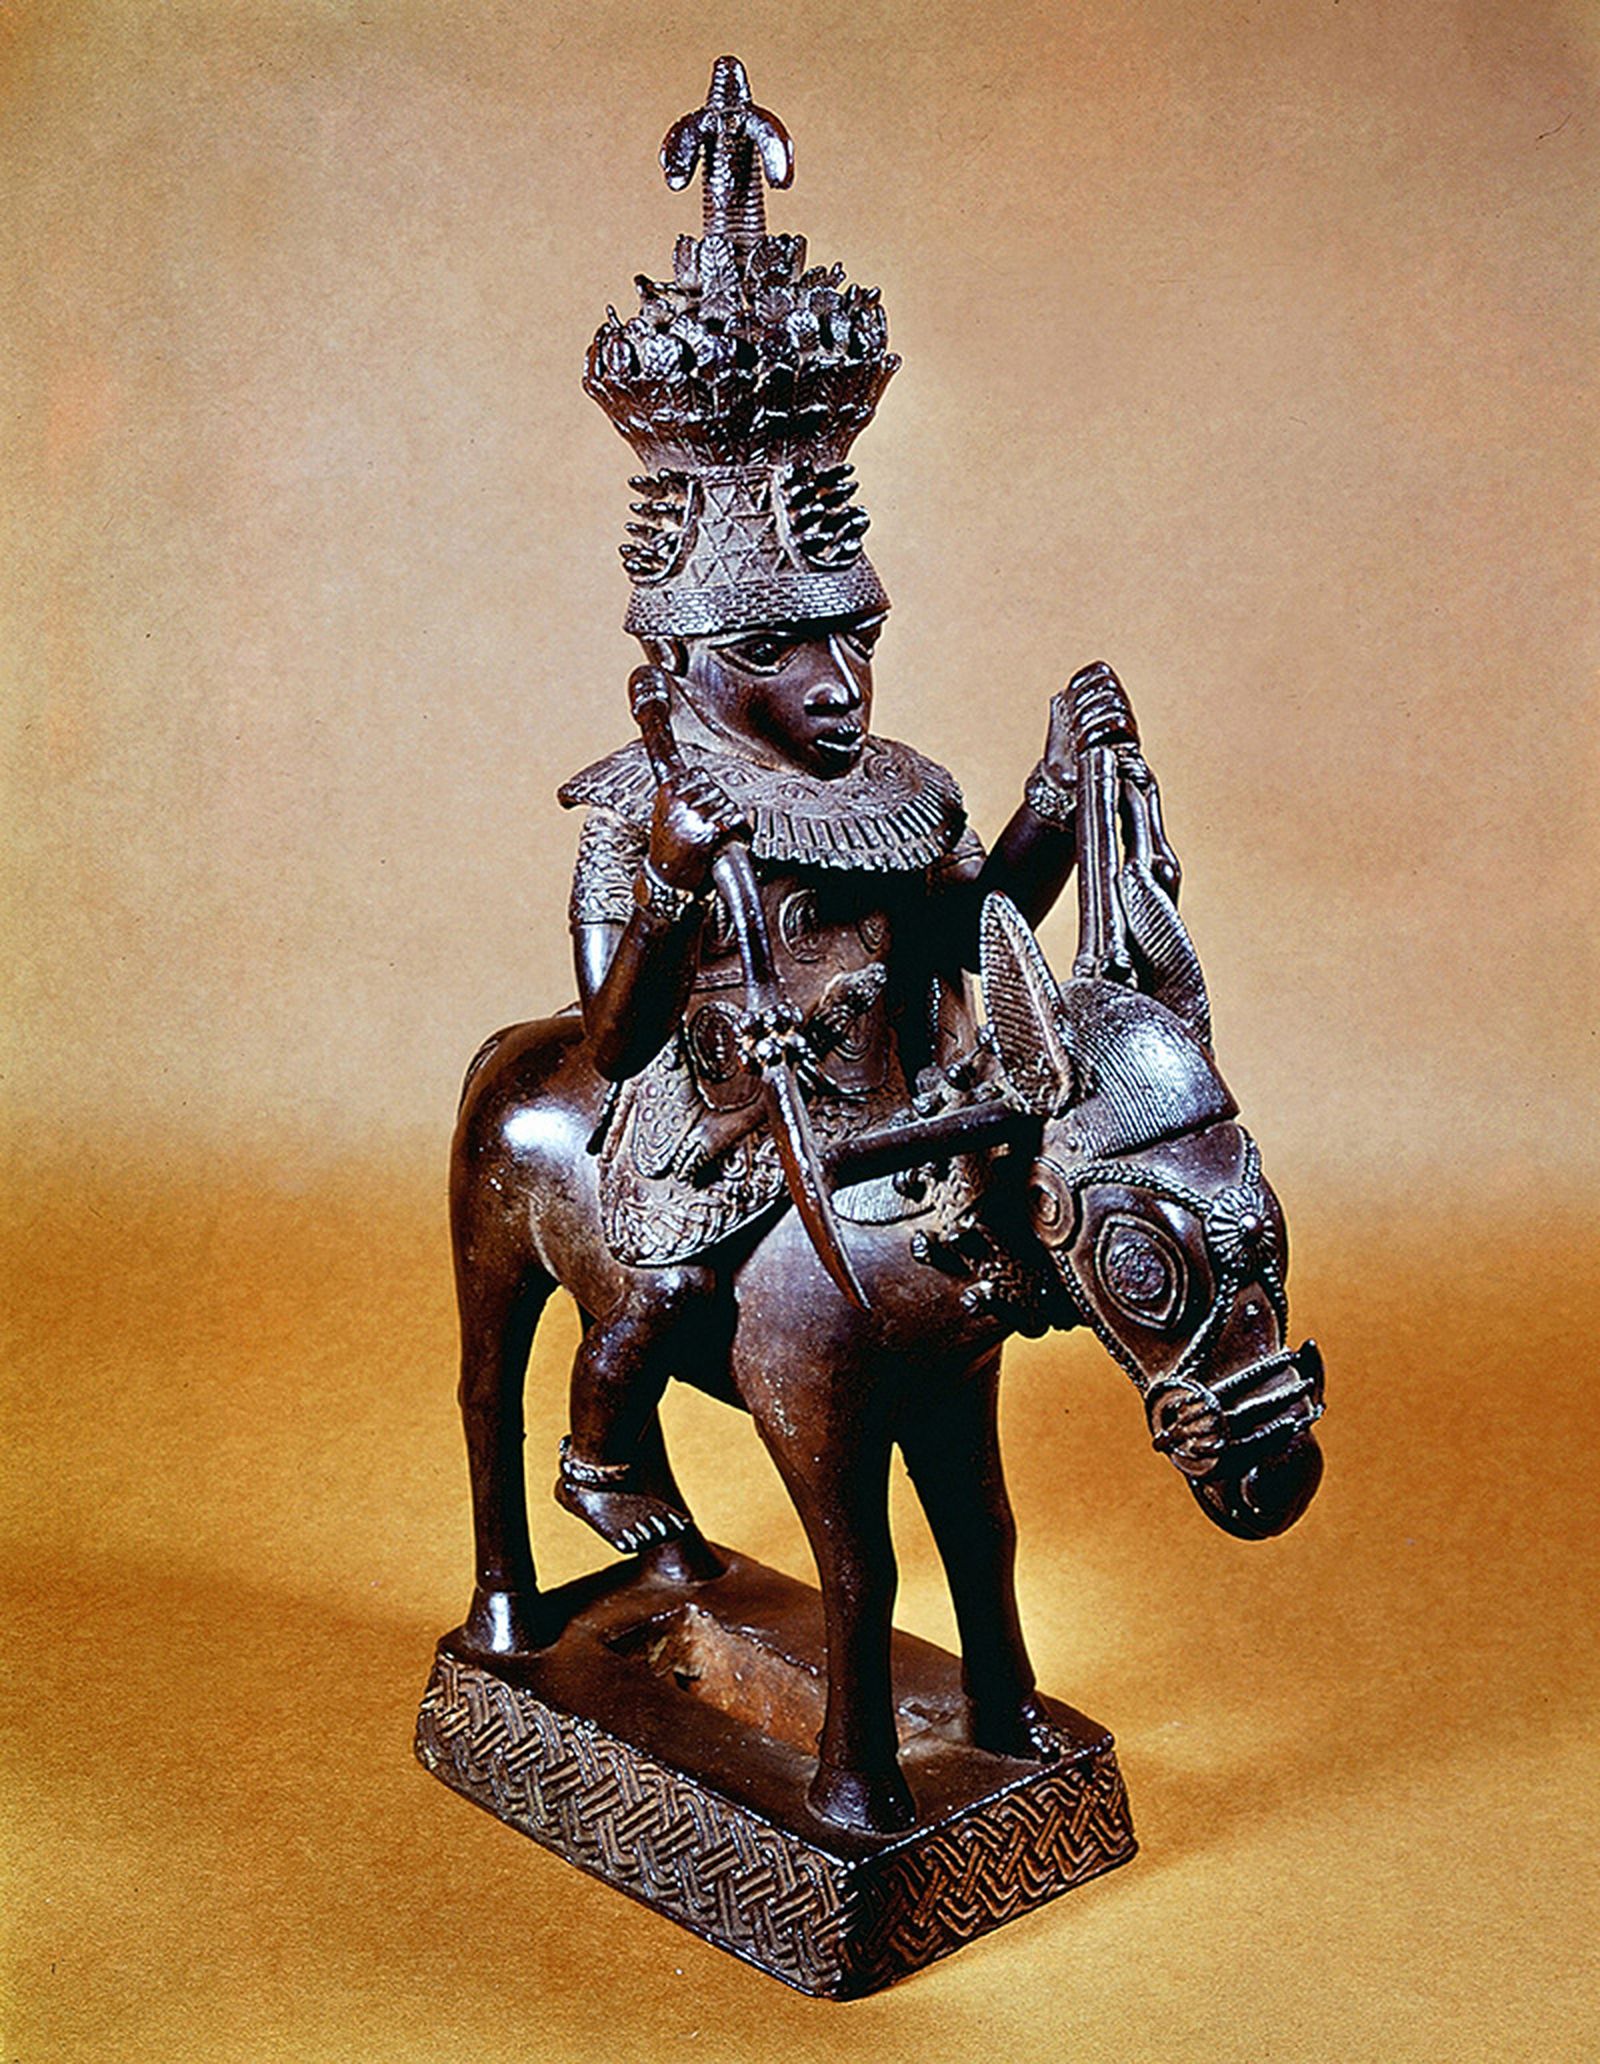 UNSPECIFIED - CIRCA 1754: Benin bronze of horse and rider. British Museum.